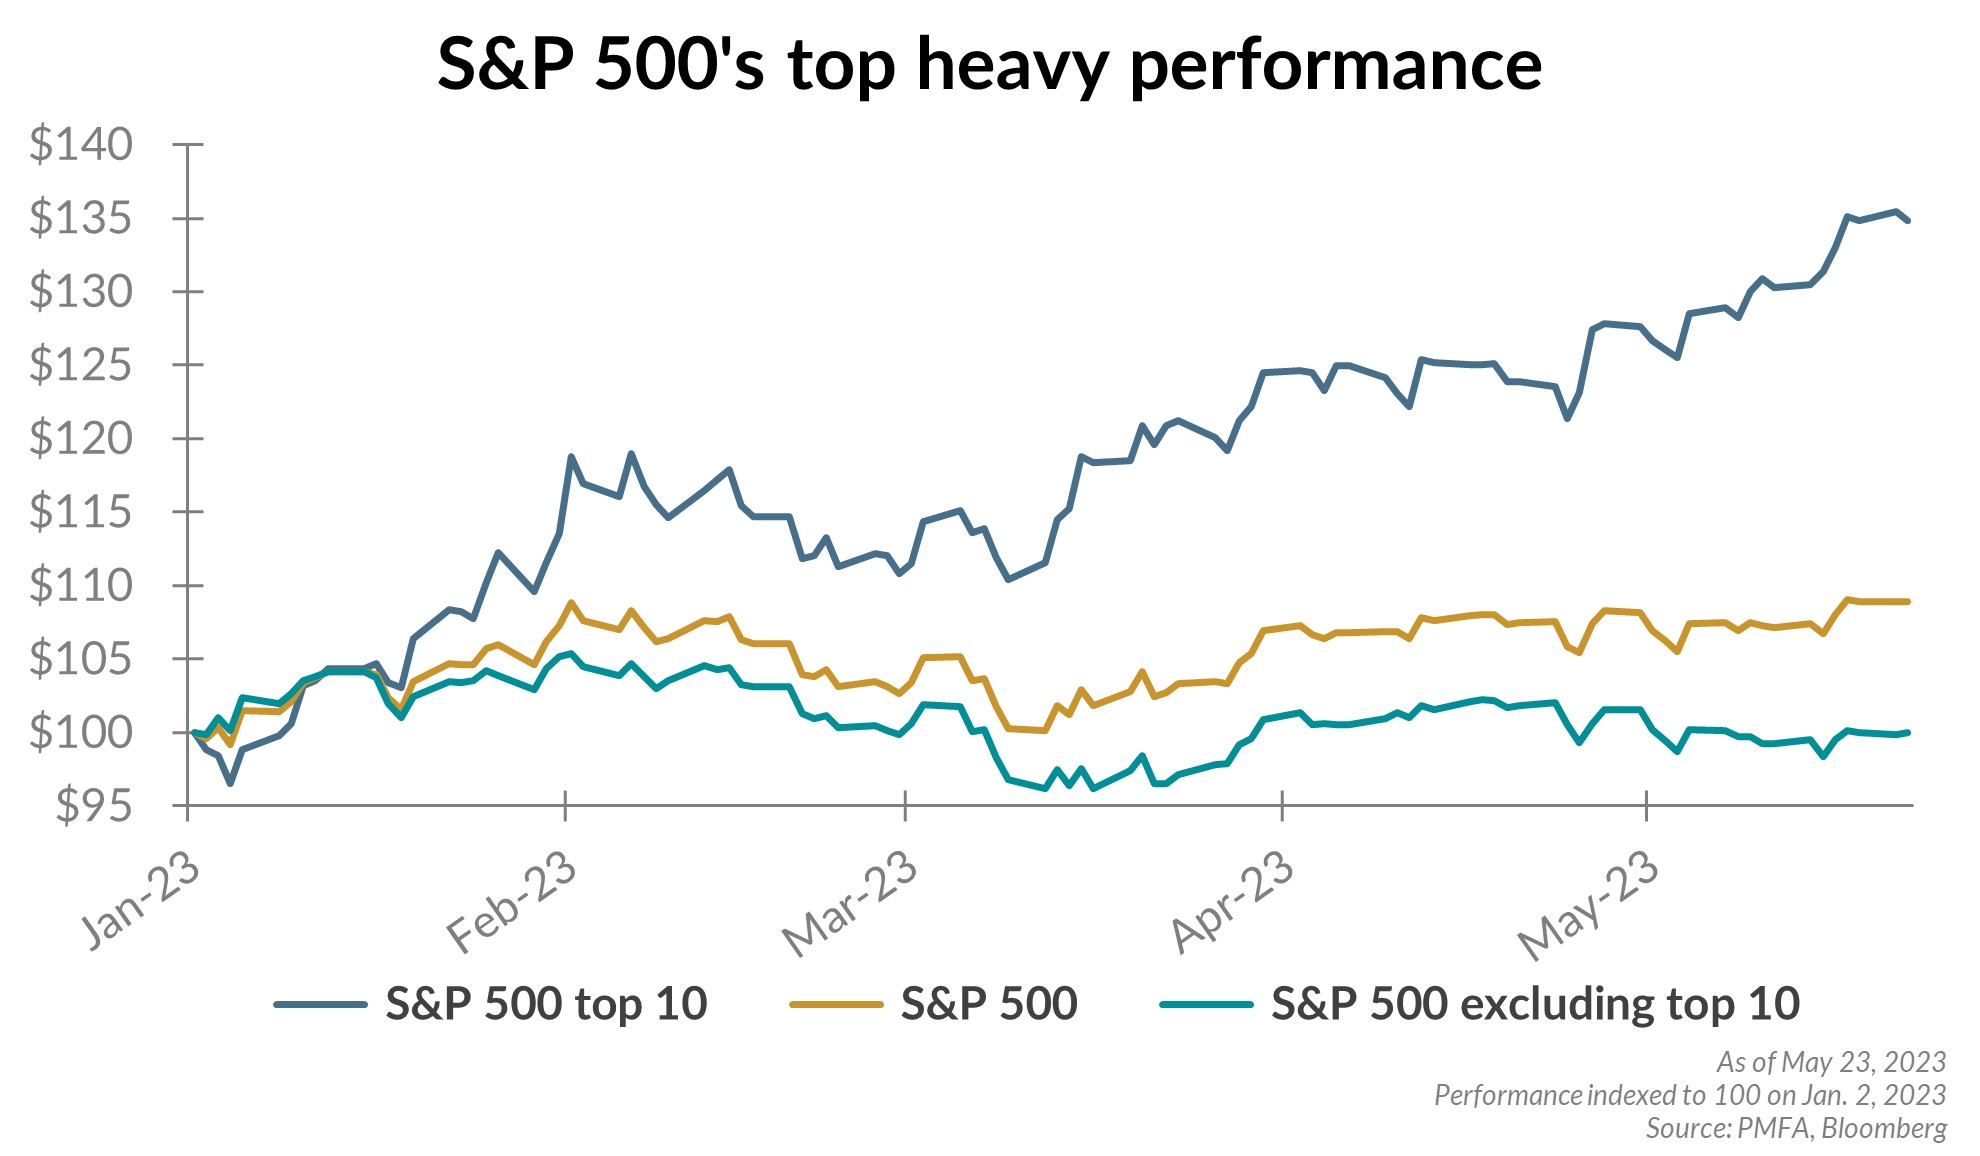 S&P 500's top heavy performance chart illustration